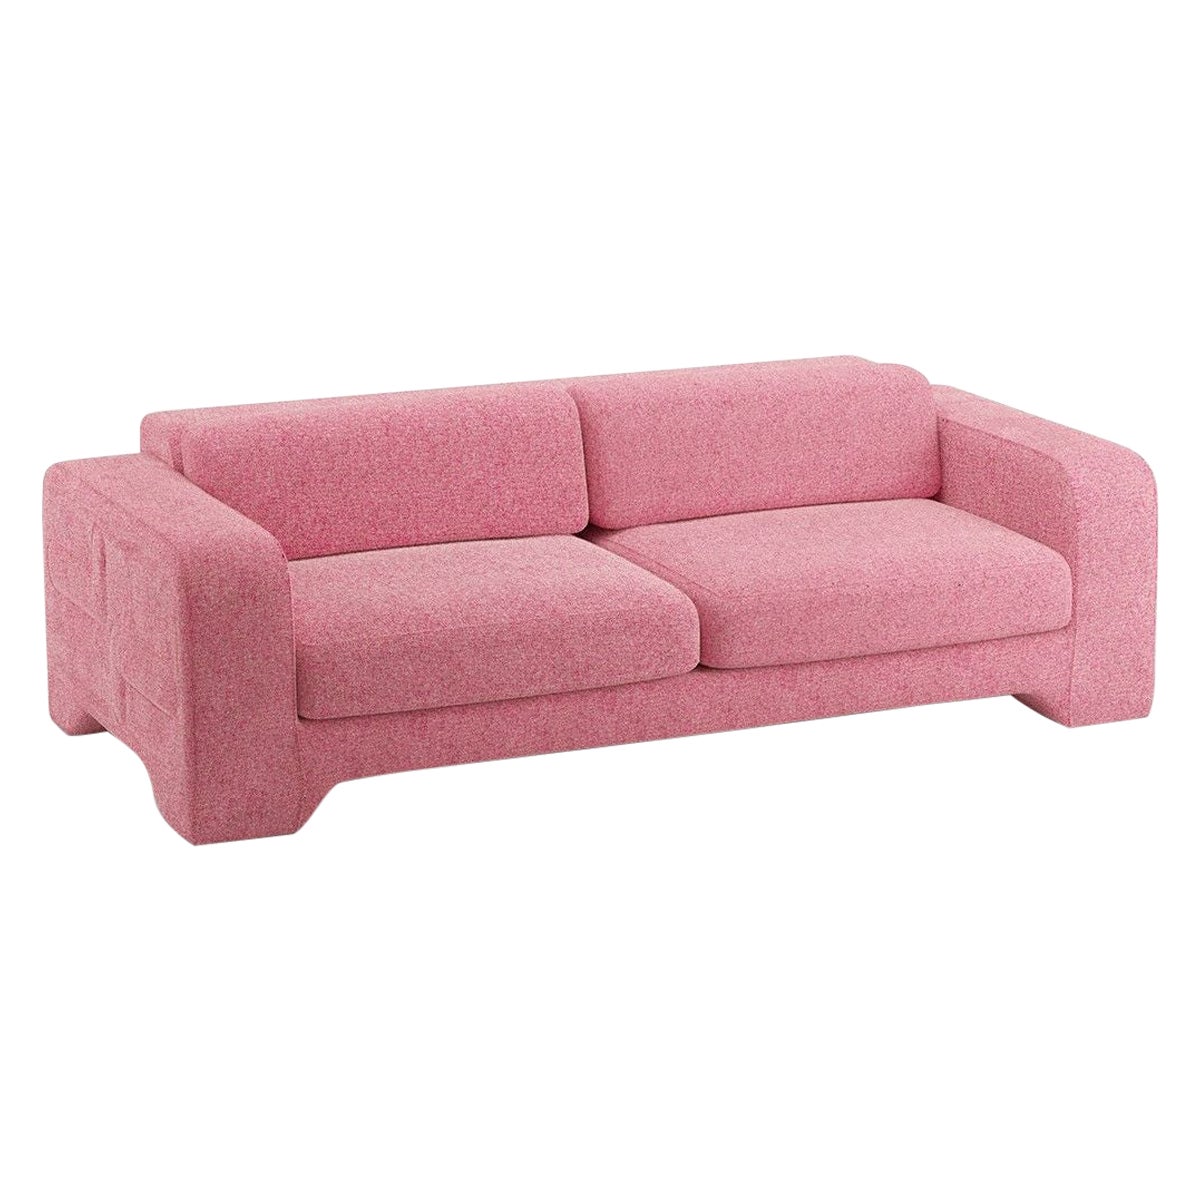 Popus Editions Giovanna 3 Seater Sofa in Fuschia London Linen Fabric For Sale